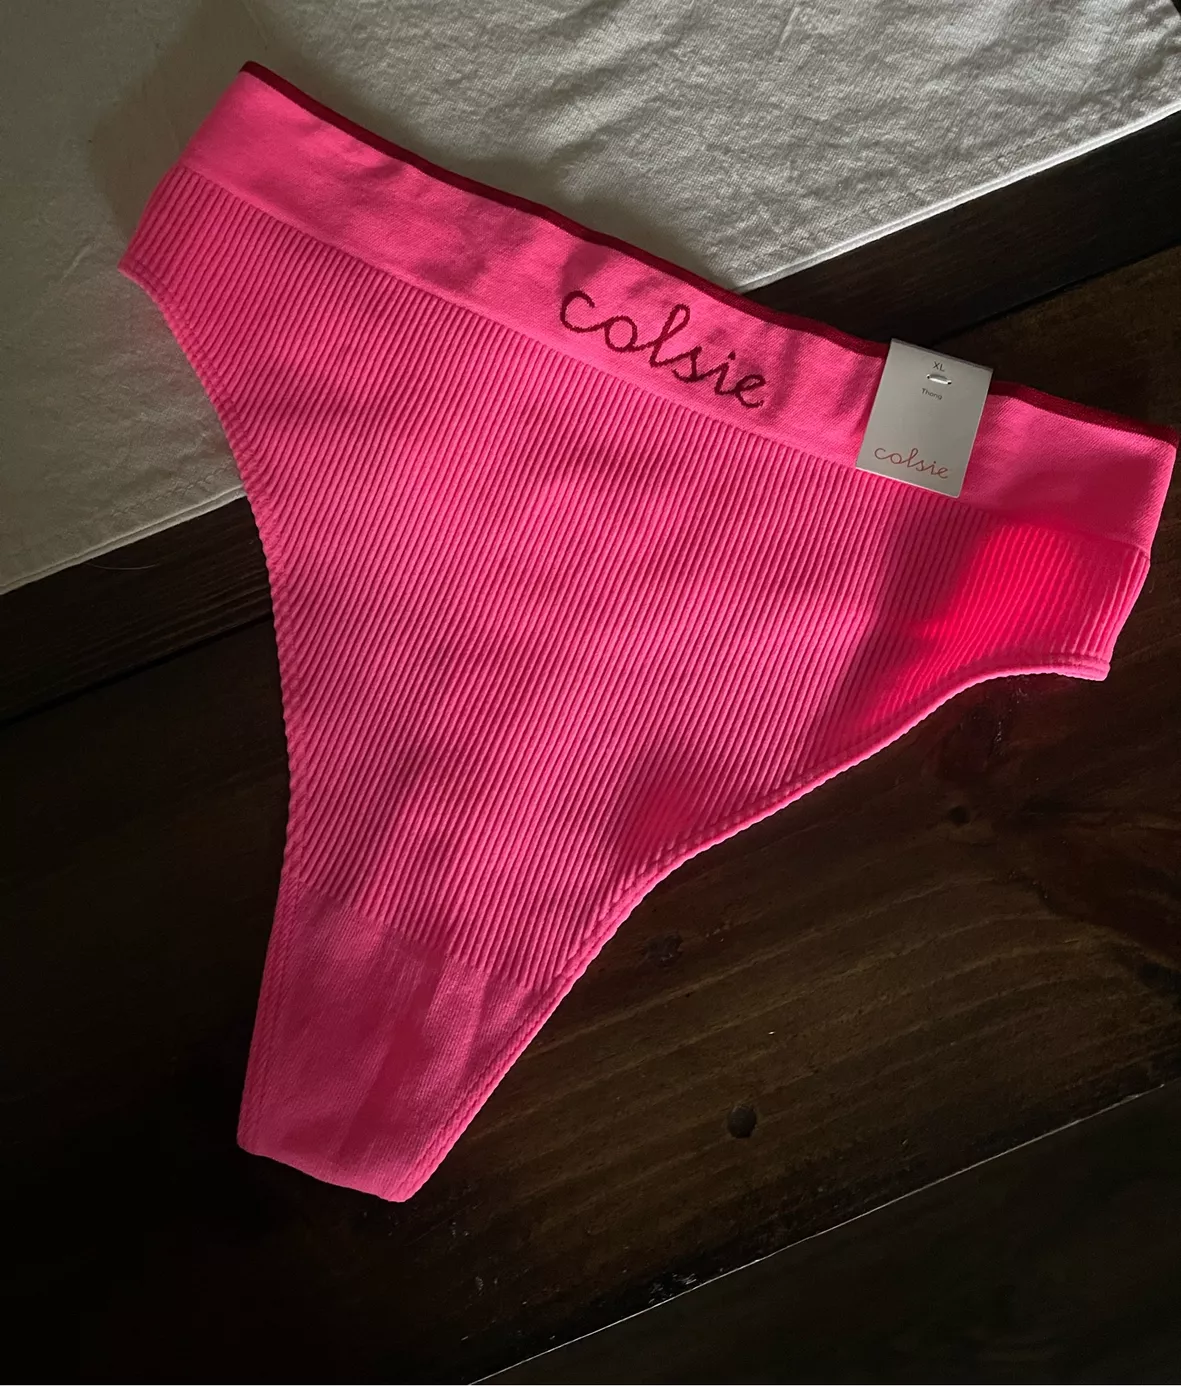 Women's Seamless Cheeky Underwear … curated on LTK